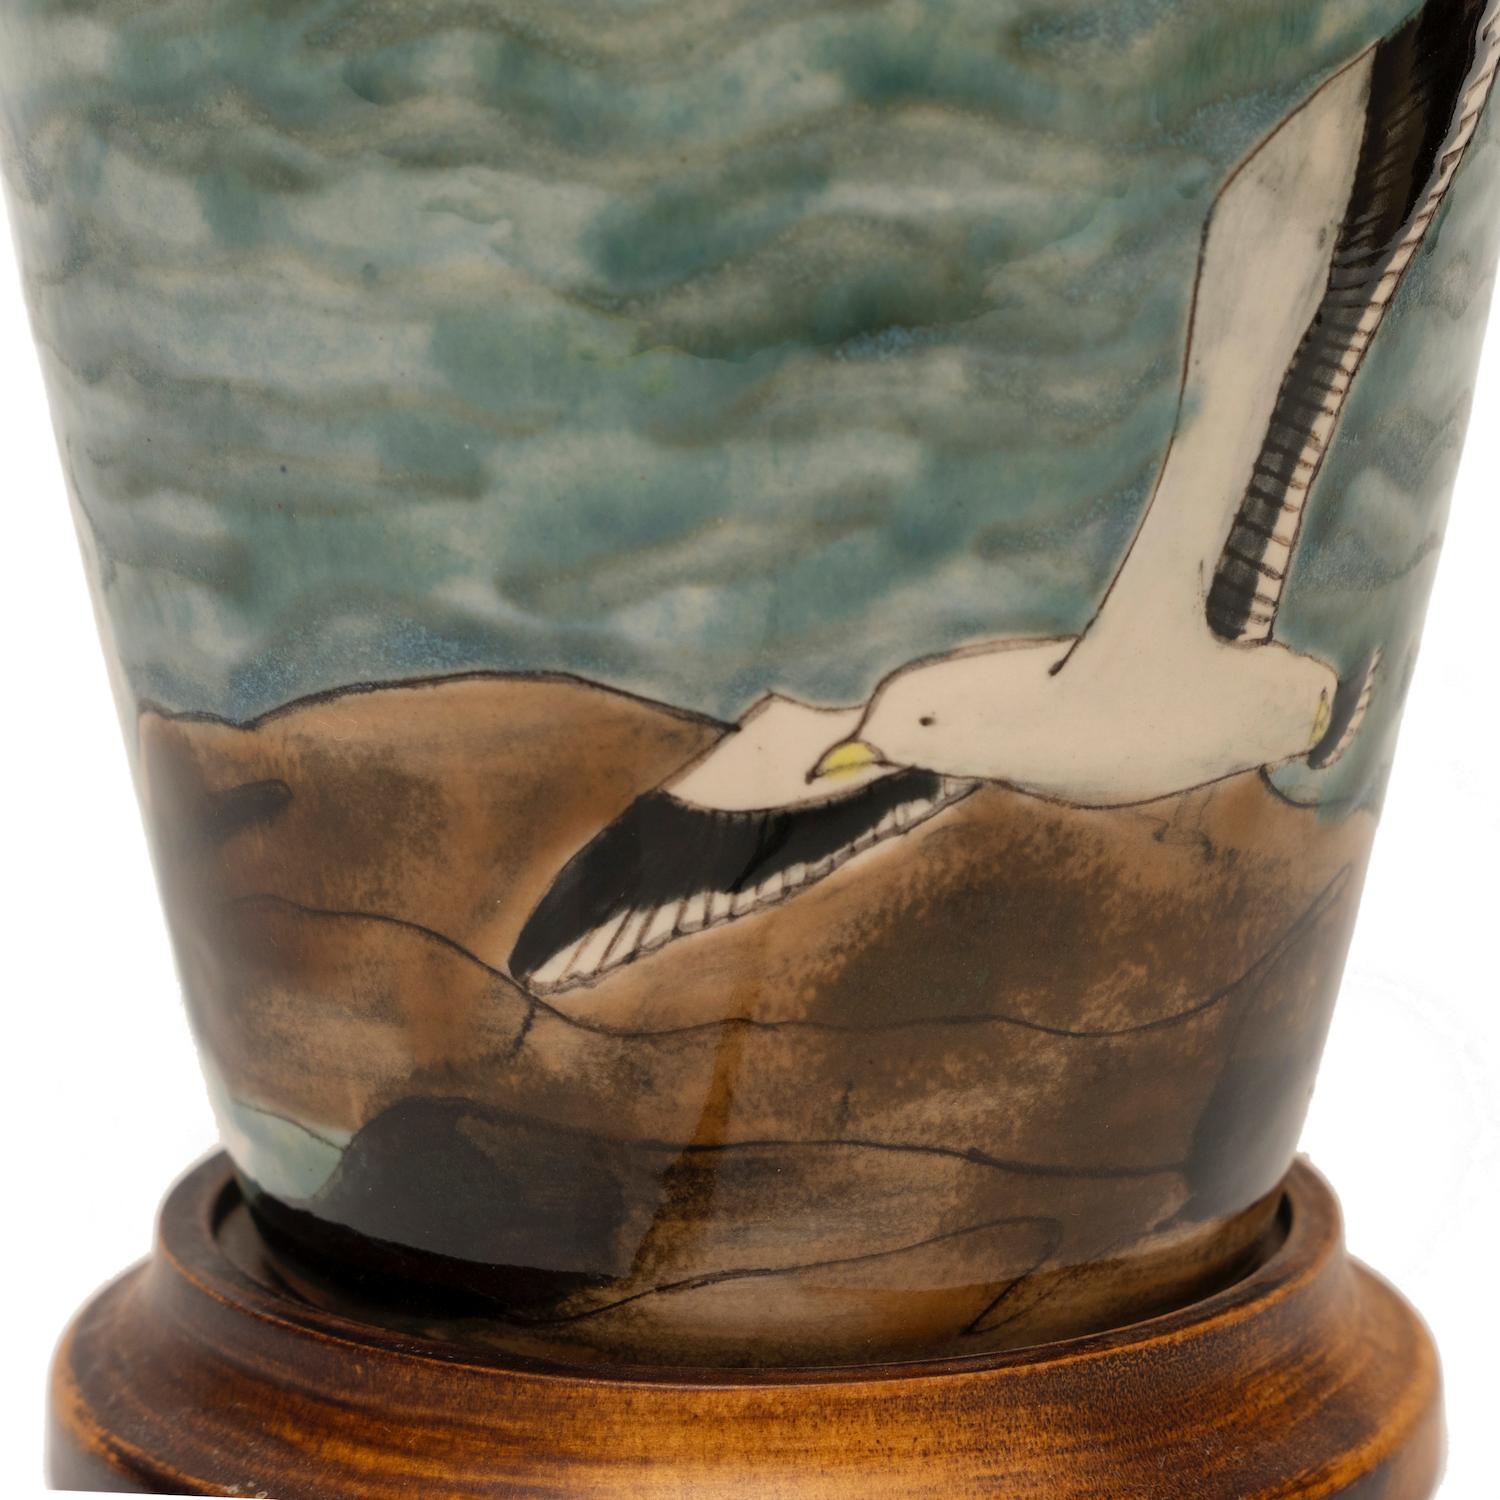 Hand-Painted Lamp Table Vase Cobridge Stoneware Trawler at Sea Seagulls Rock 37cm/14.5